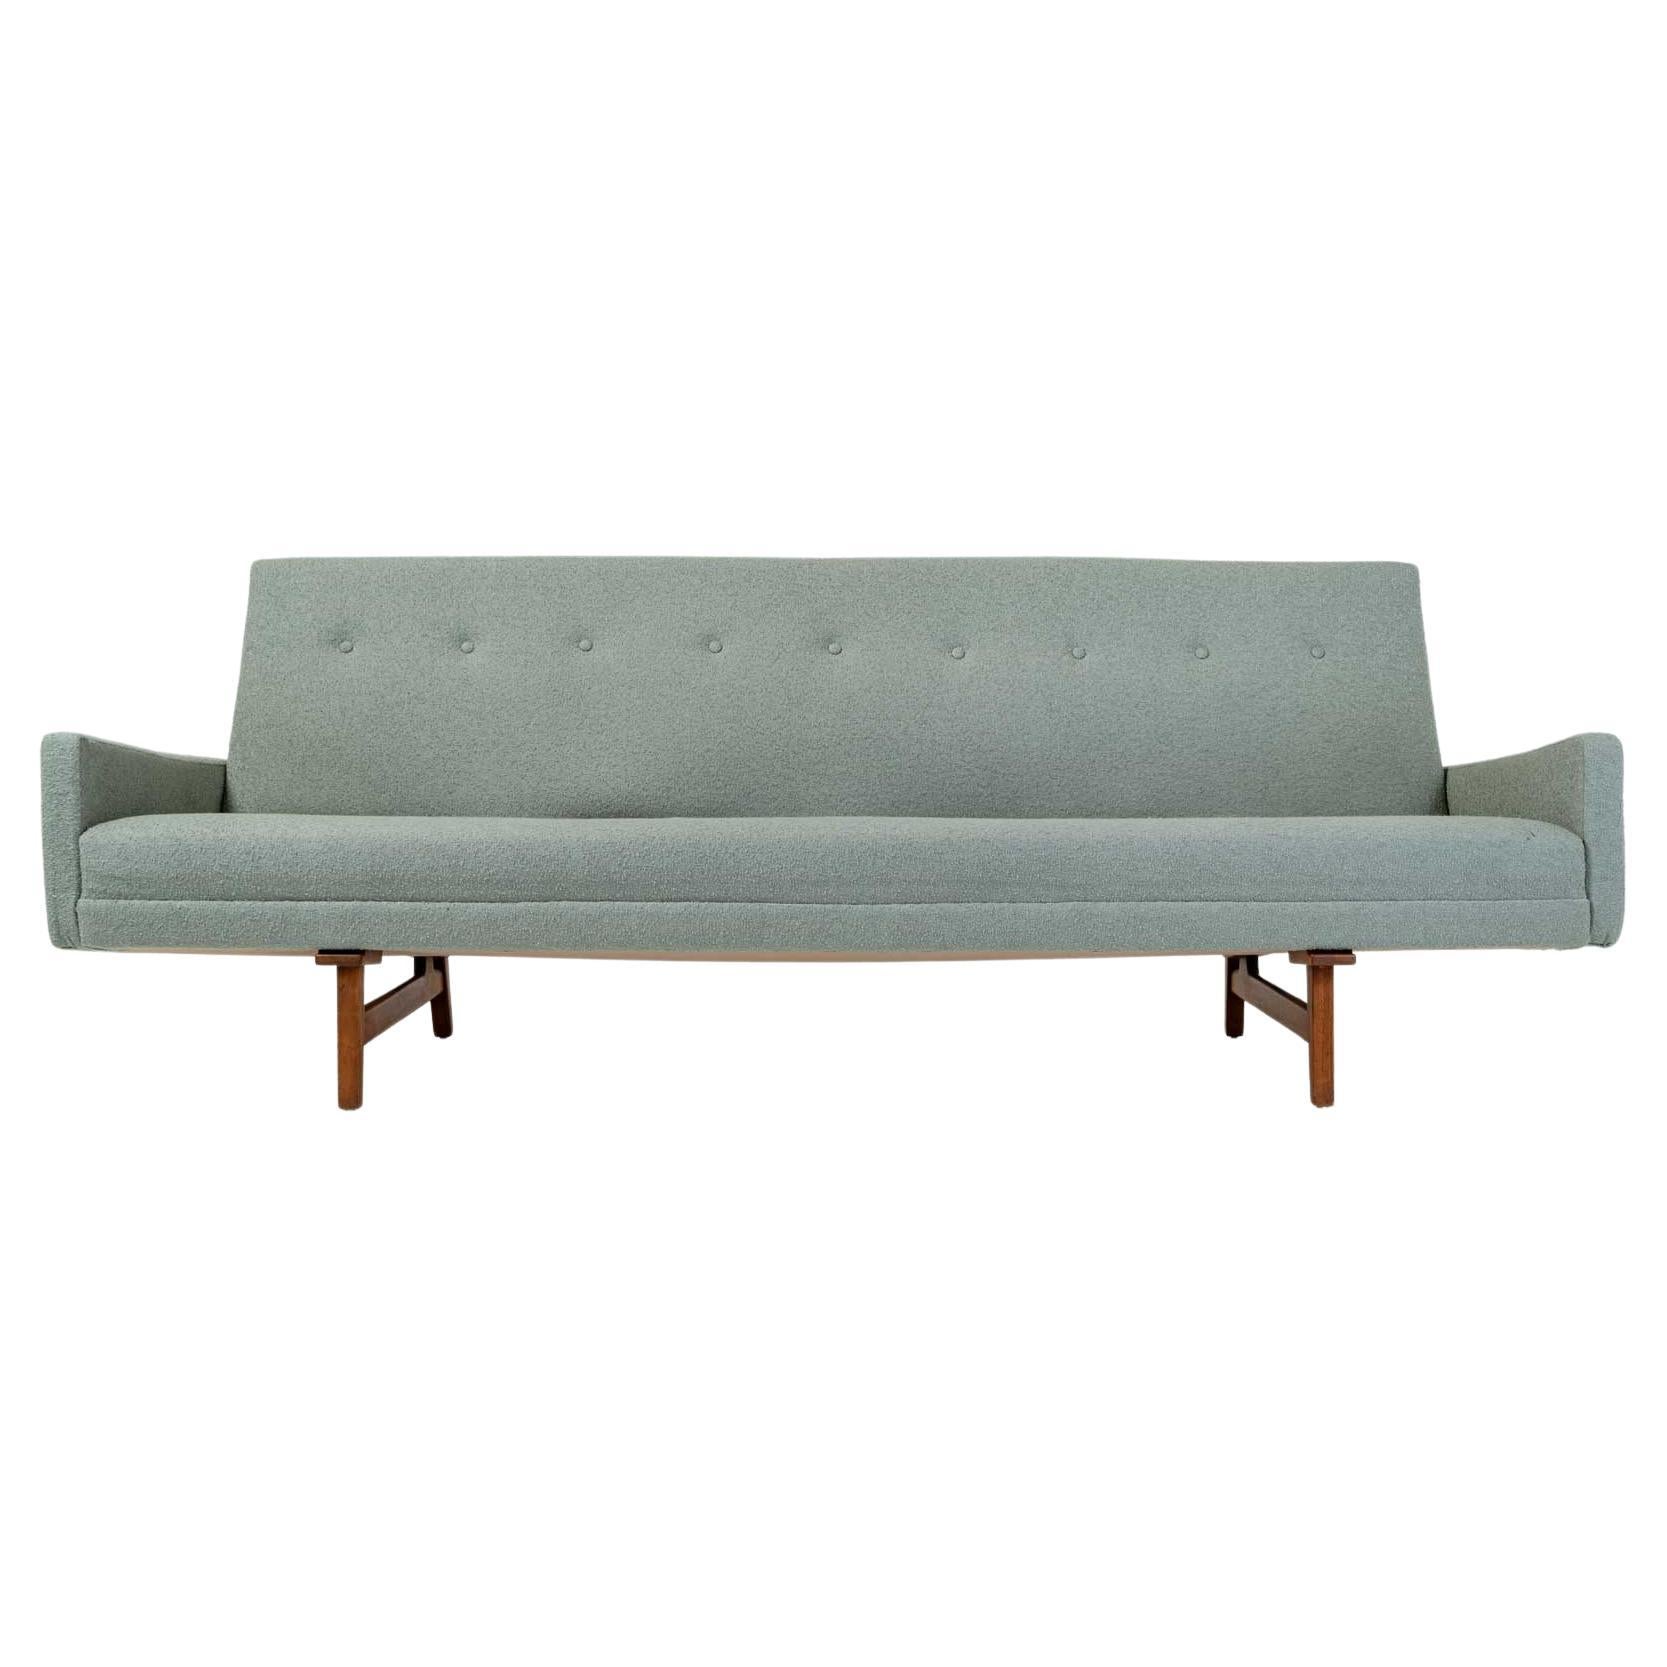 Jen Risom for Jen Risom Inc Three Seater Sofa Reupholstered in Teal Bouclé